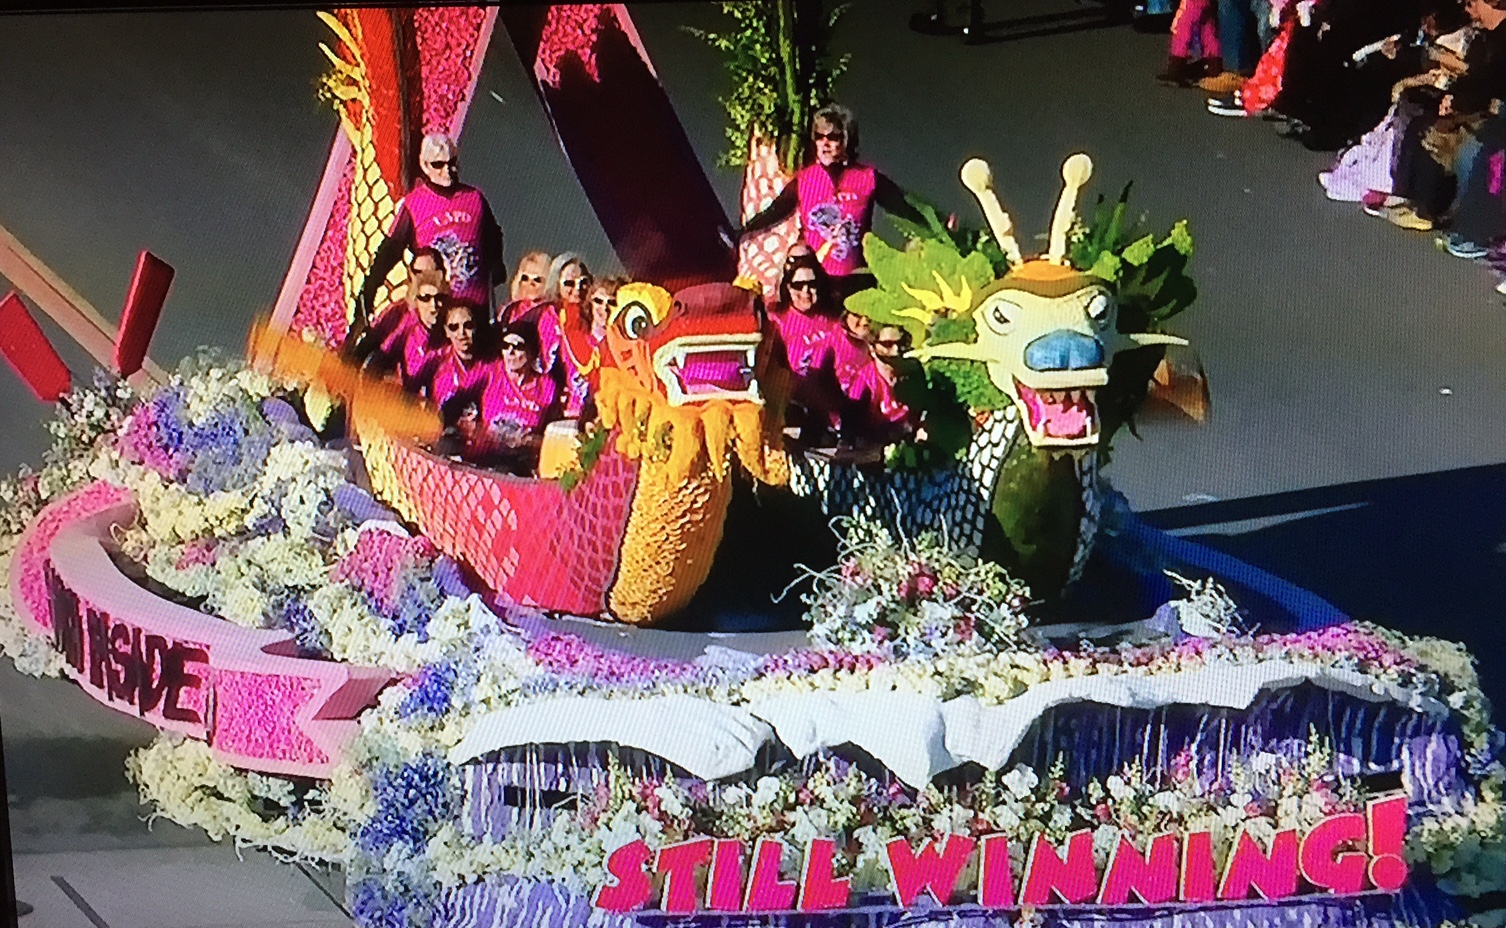 LA Pink Dragon Rose Bowl Float 2015/NBC Screenshot